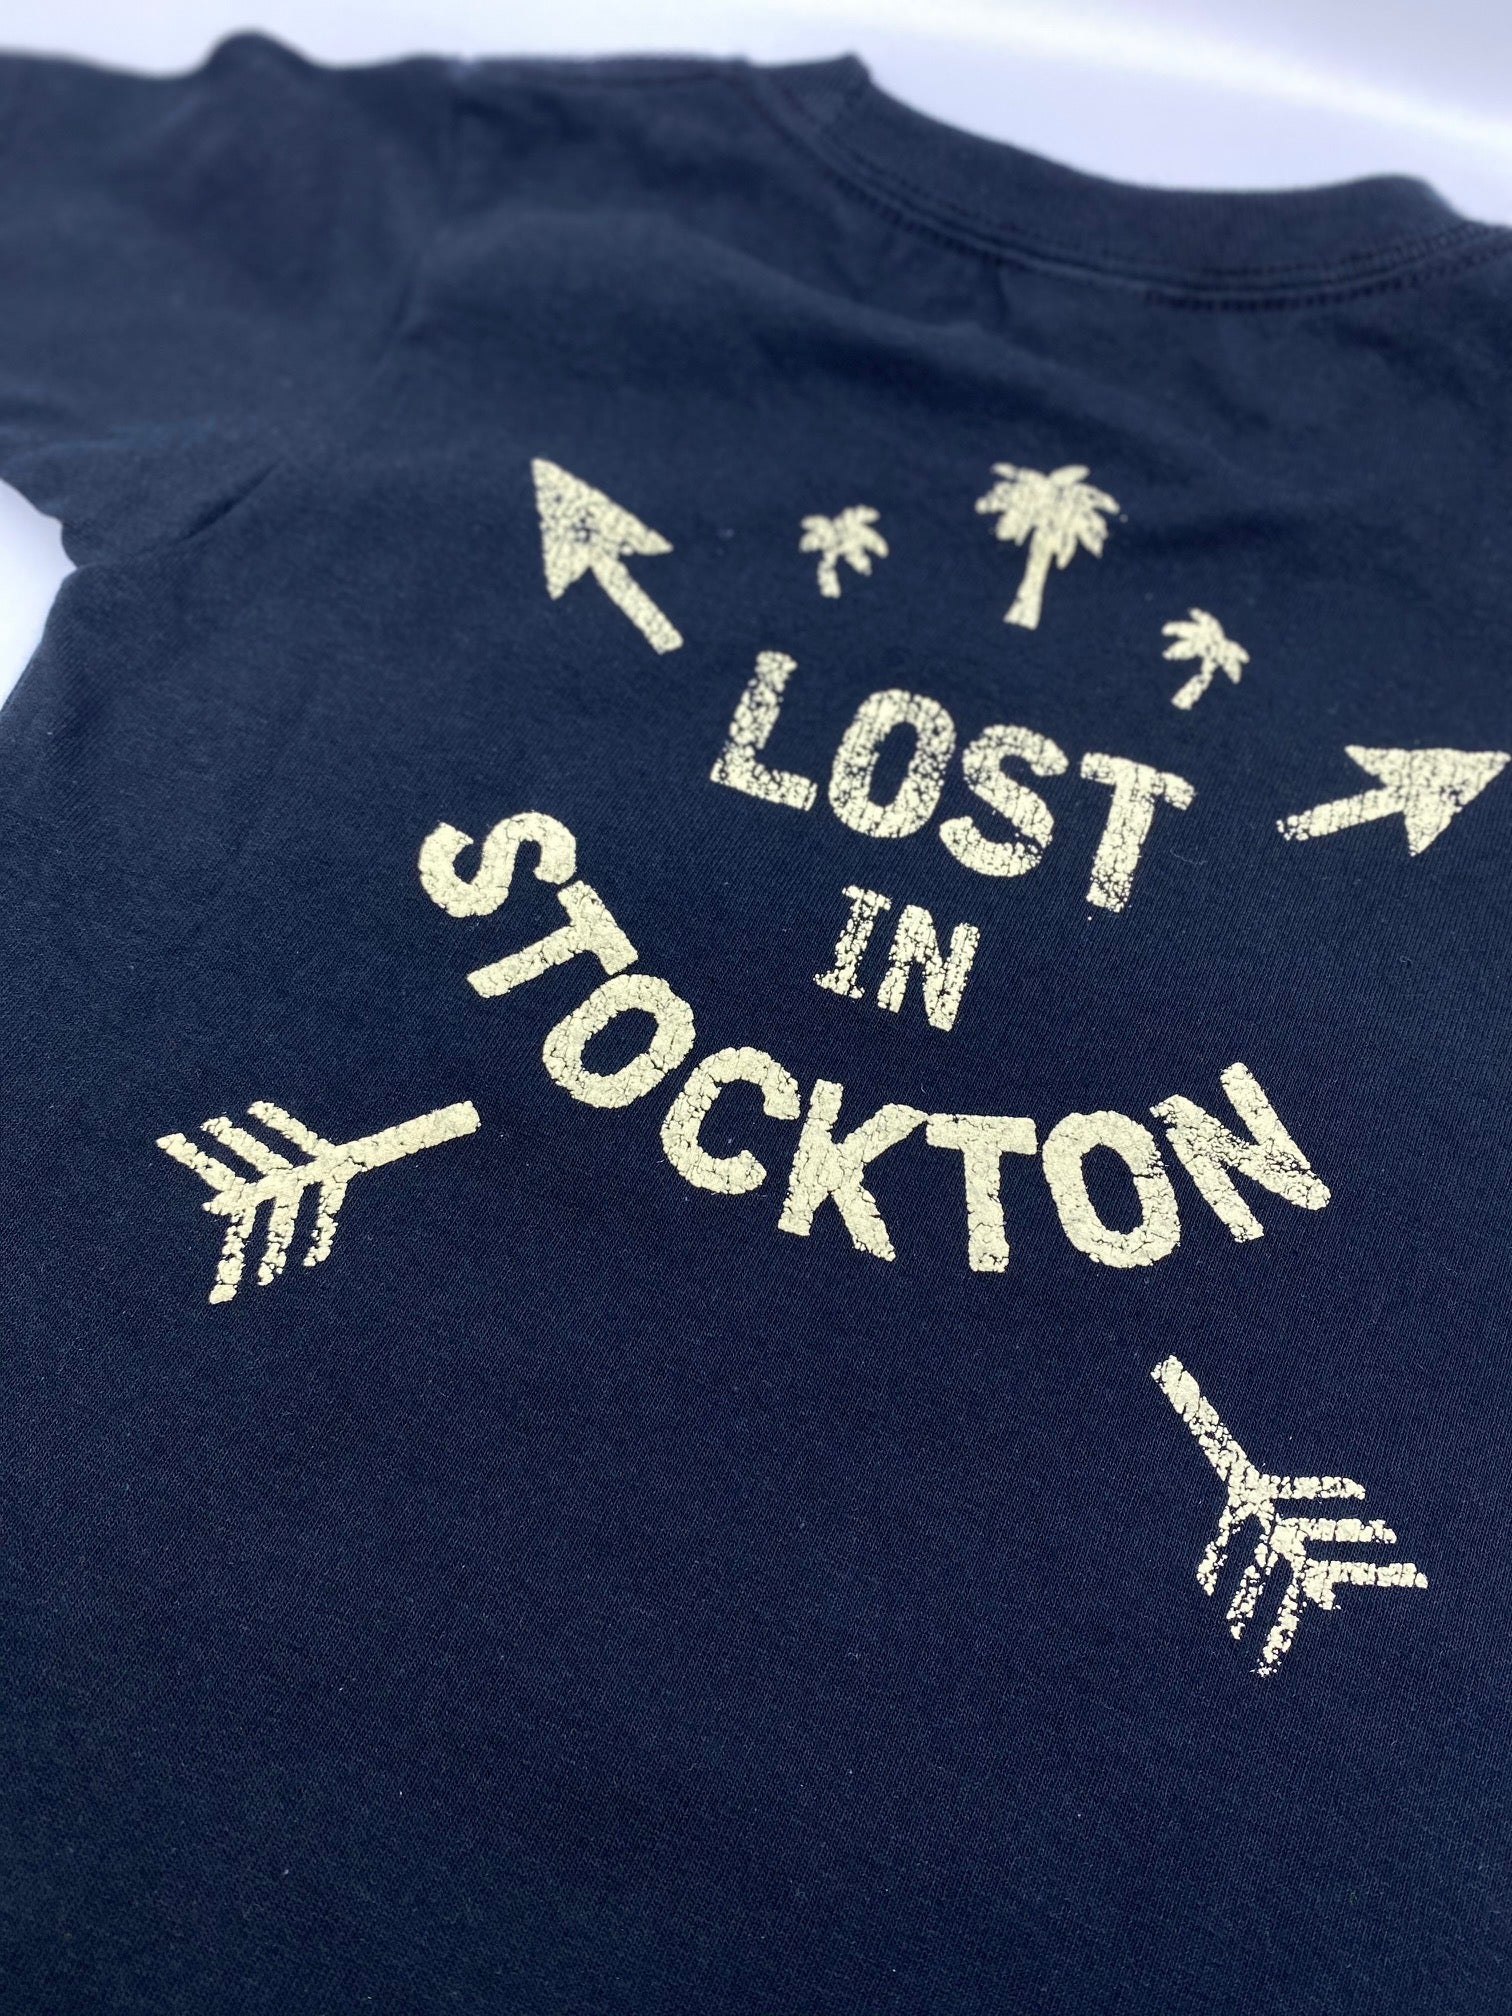 Lost In Stockton Tshirt